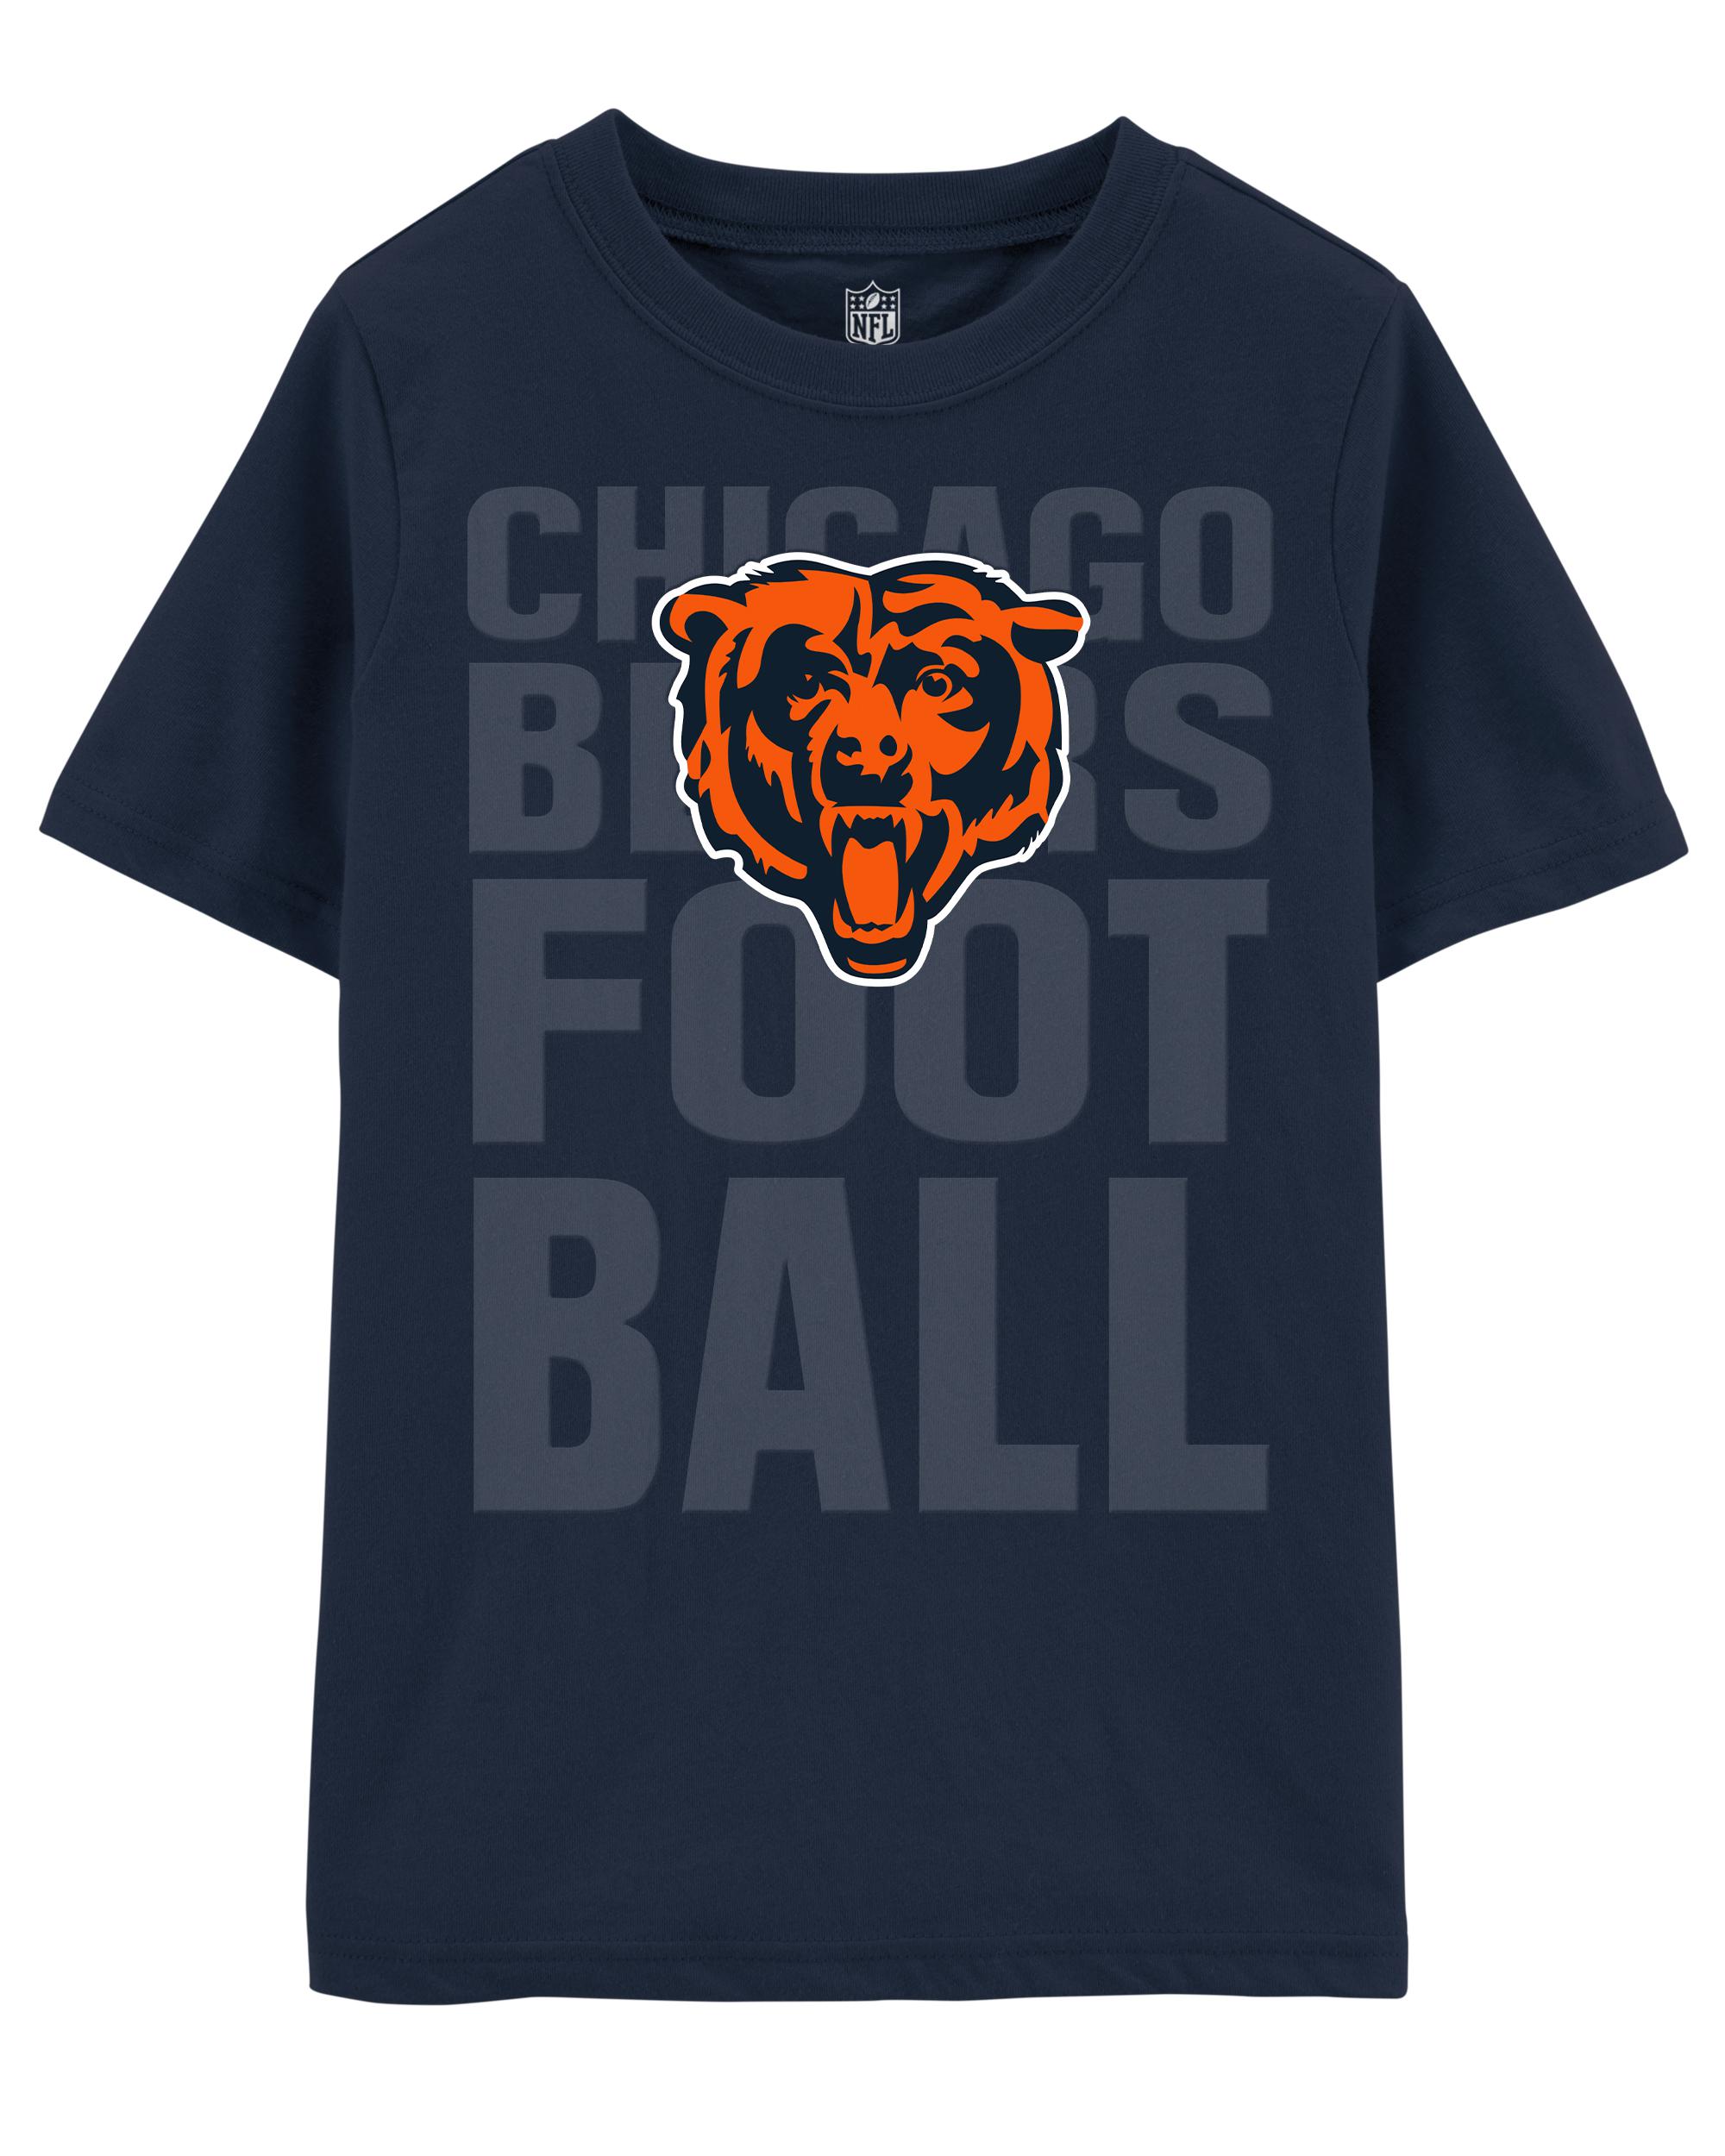 nfl chicago bears shirts